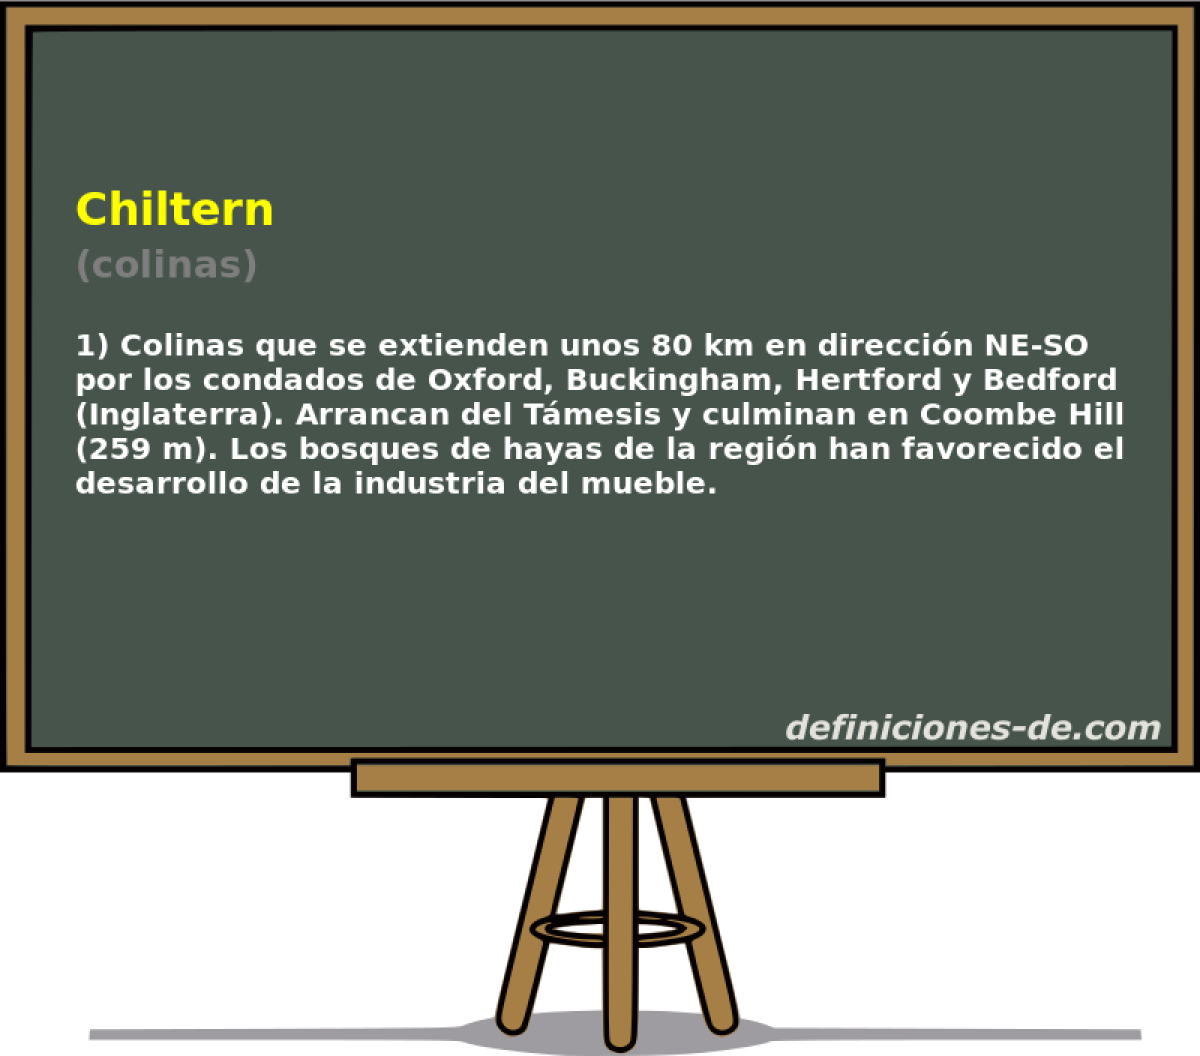 Chiltern (colinas)